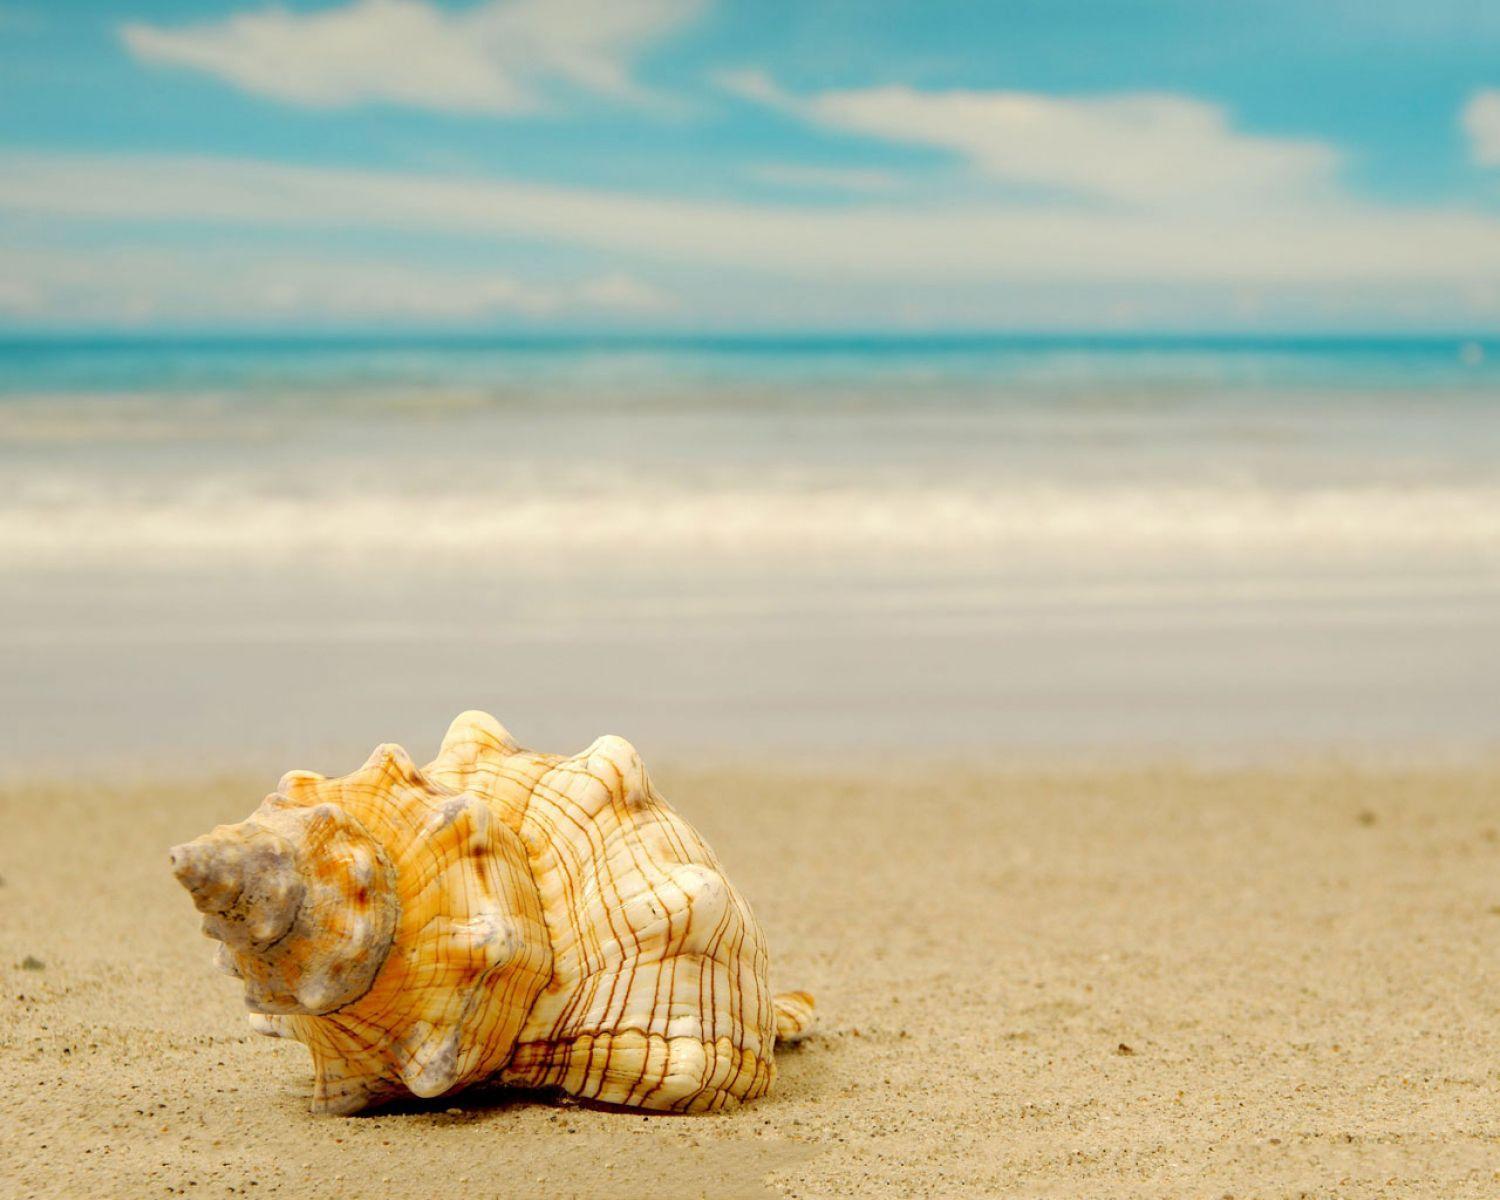 Seashells On Beach. HD Nature Wallpaper for Mobile and Desktop